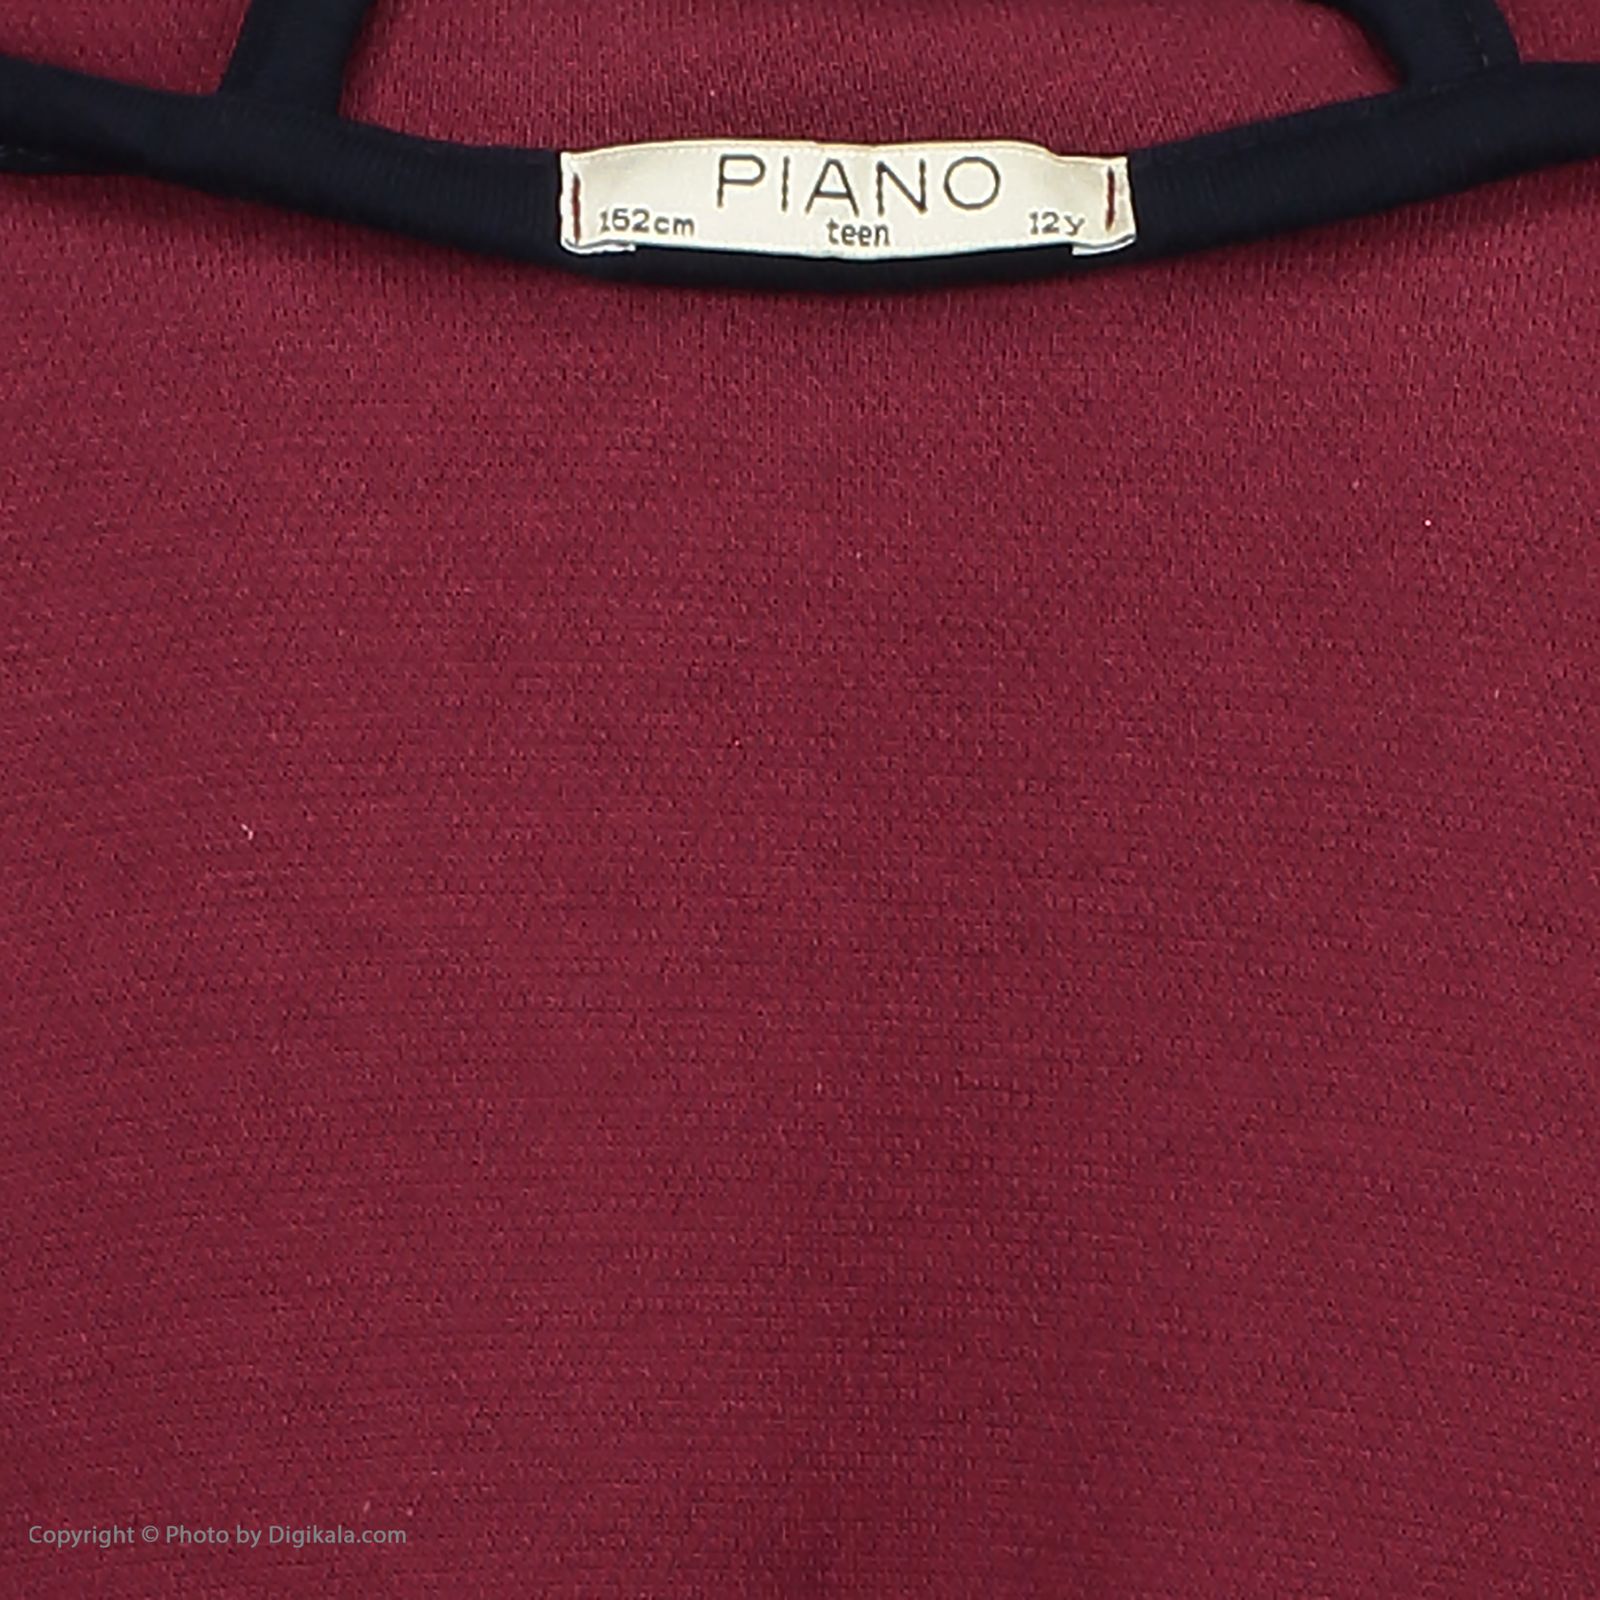 رویه دخترانه پیانو مدل 01691-70 -  - 6